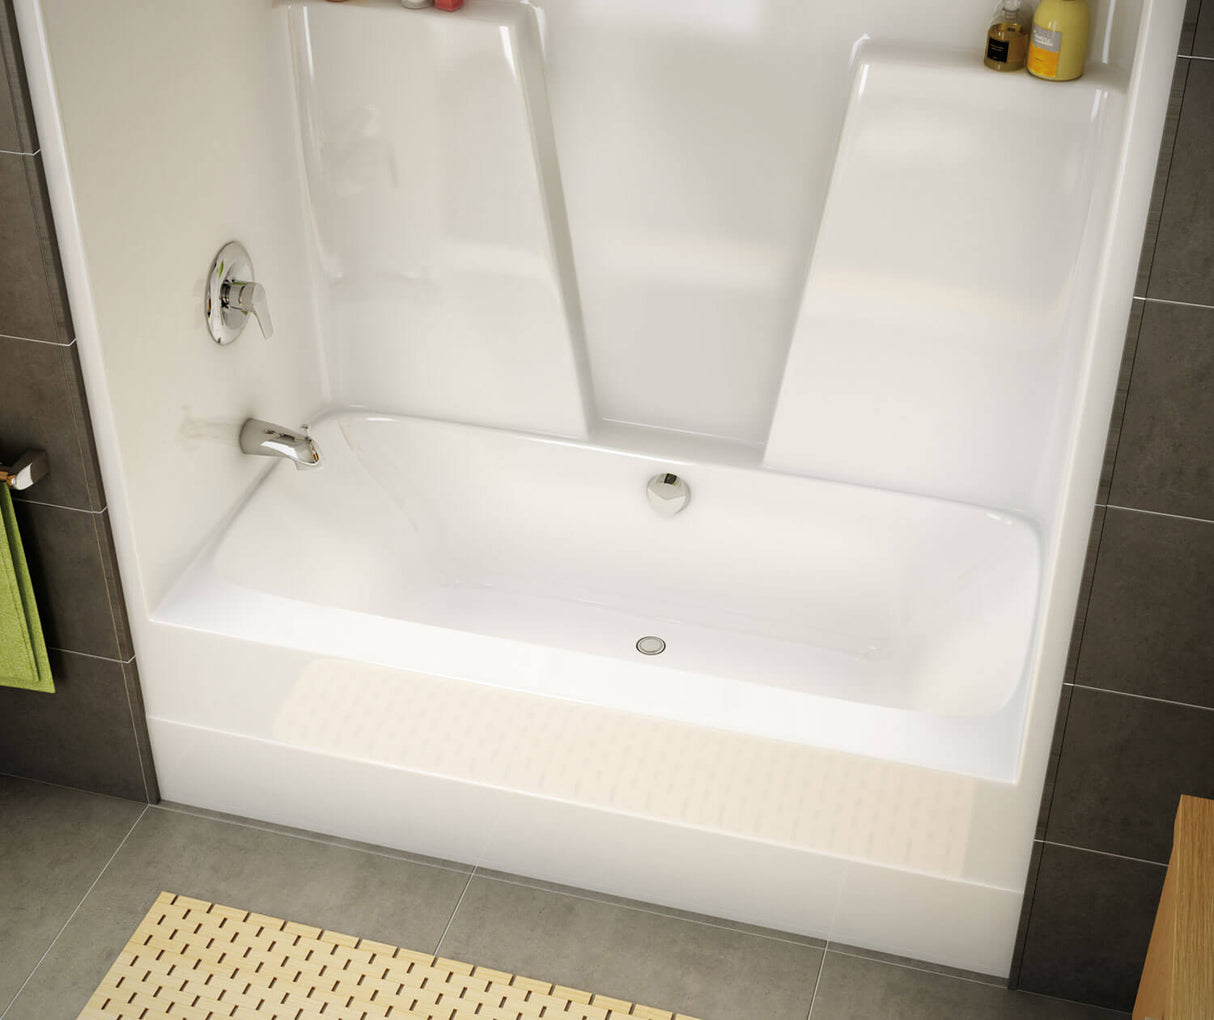 MAAX 140001-003-002 BG6034C AcrylX Alcove Center Drain One-Piece Whirlpool Tub Shower in White